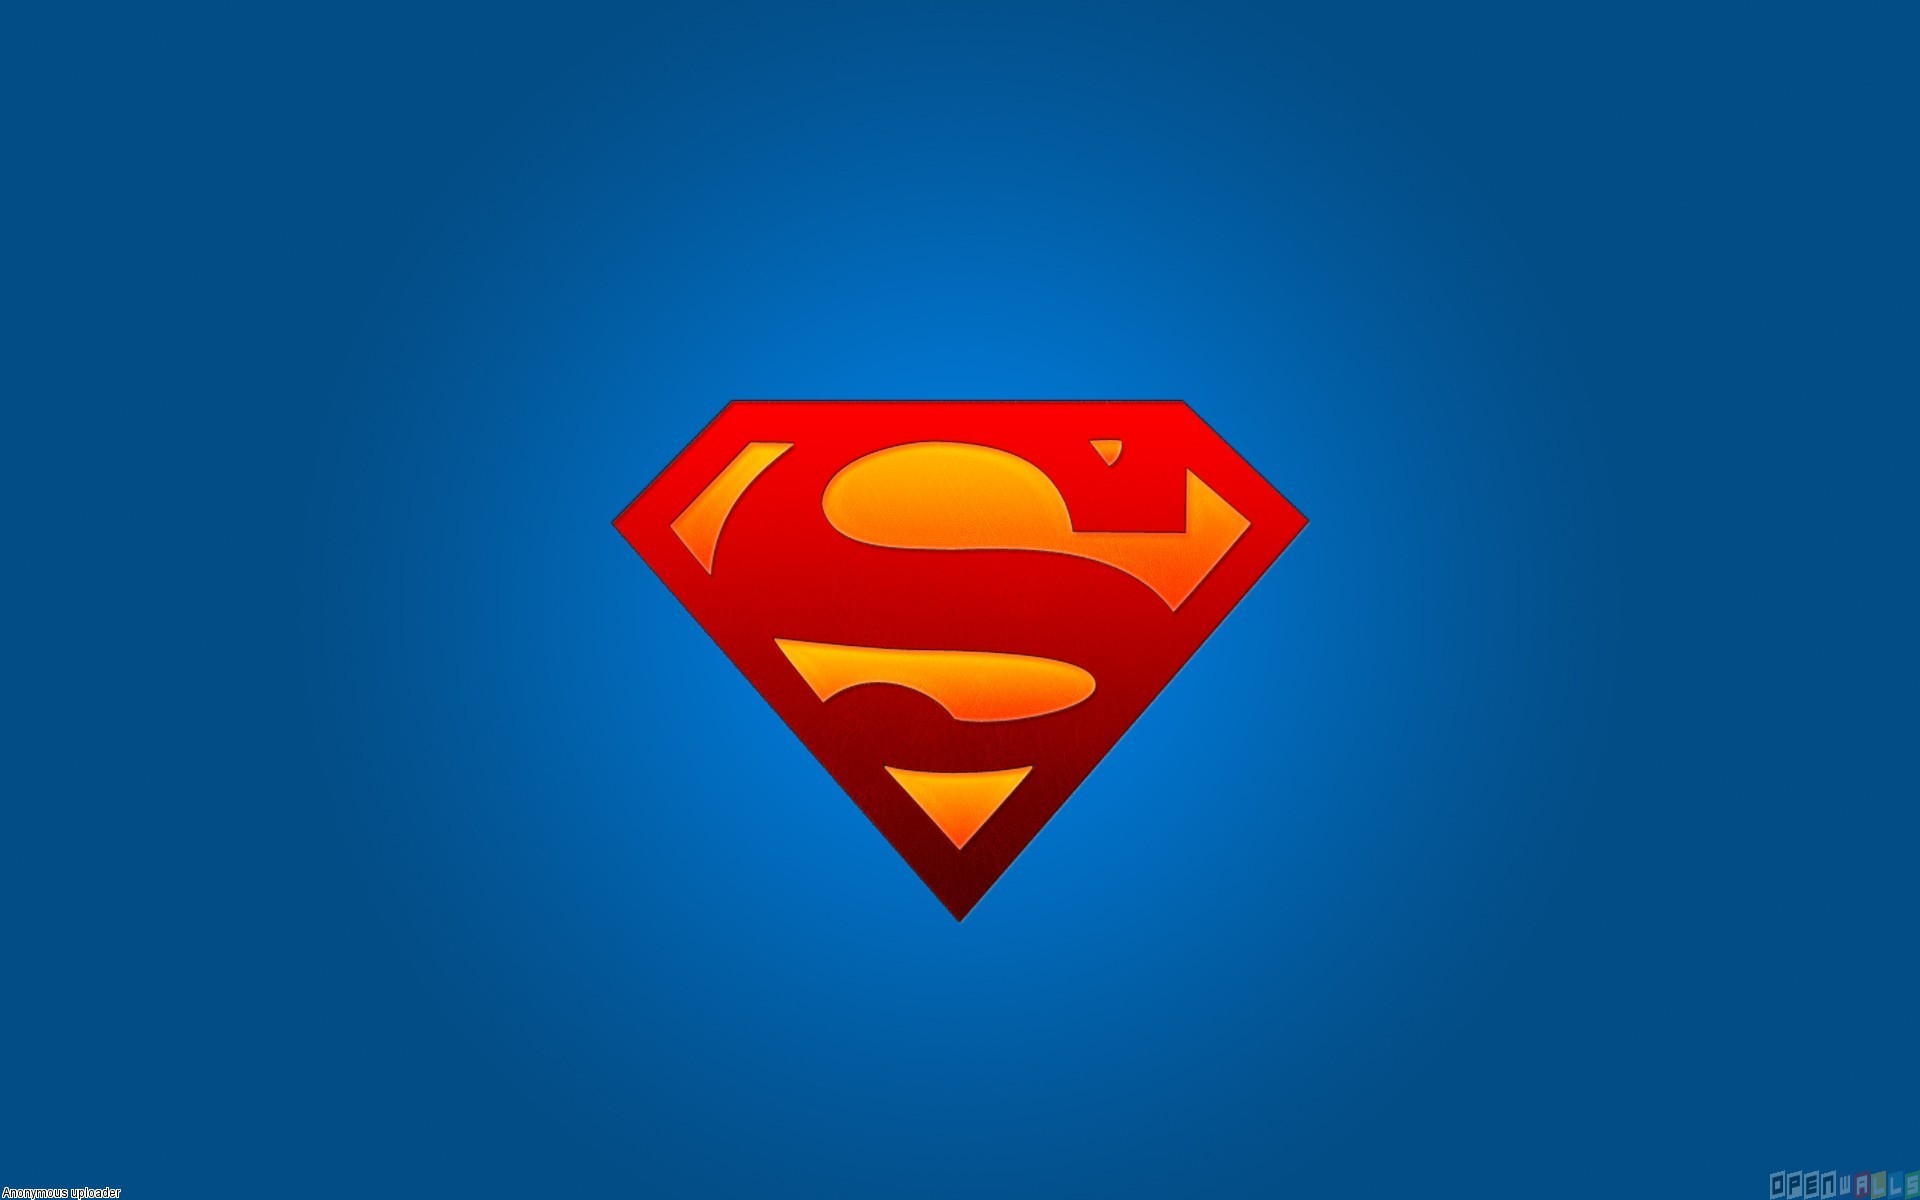 Superman Logo Wallpaper HD In Logos Imageci